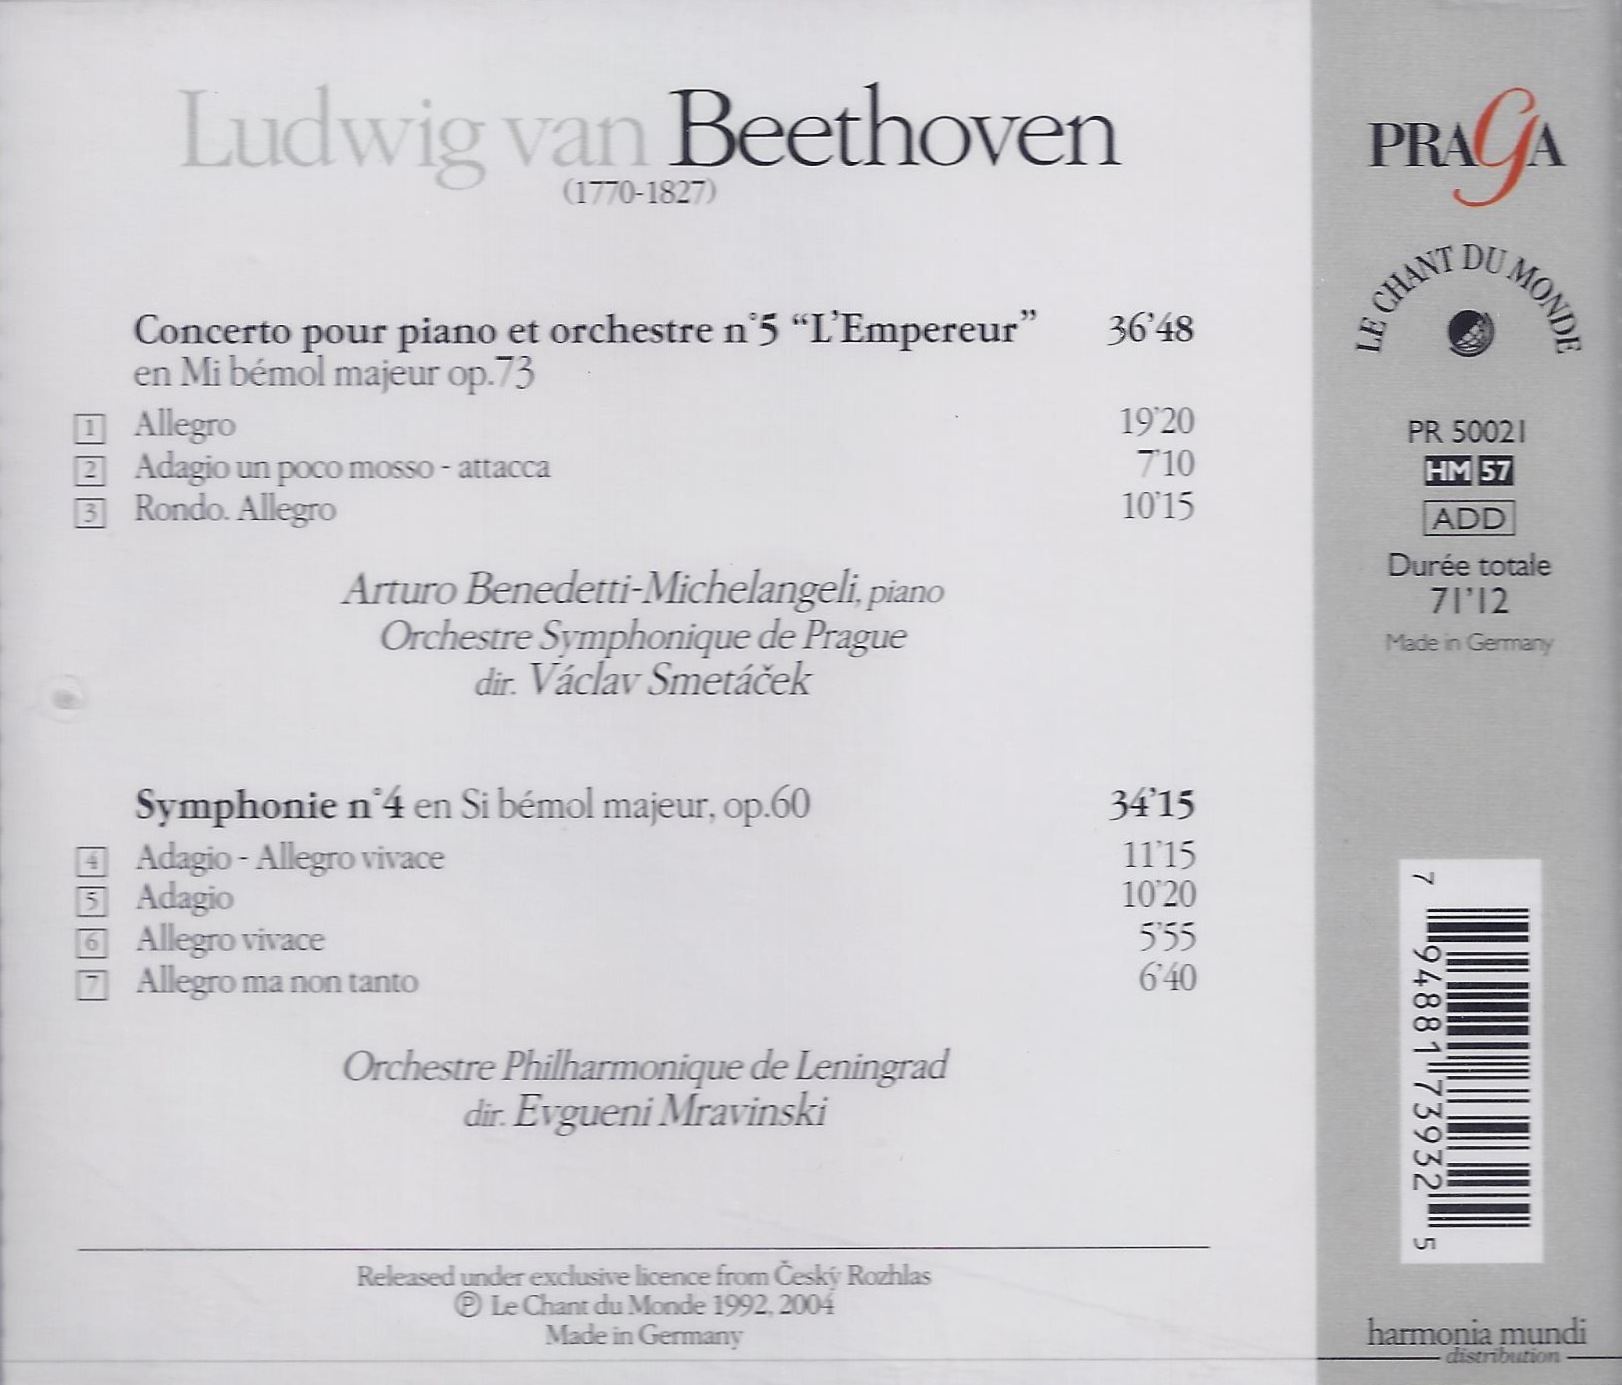 Beethoven: Piano Concerto No. 5, Symphony No. 4 - slide-1